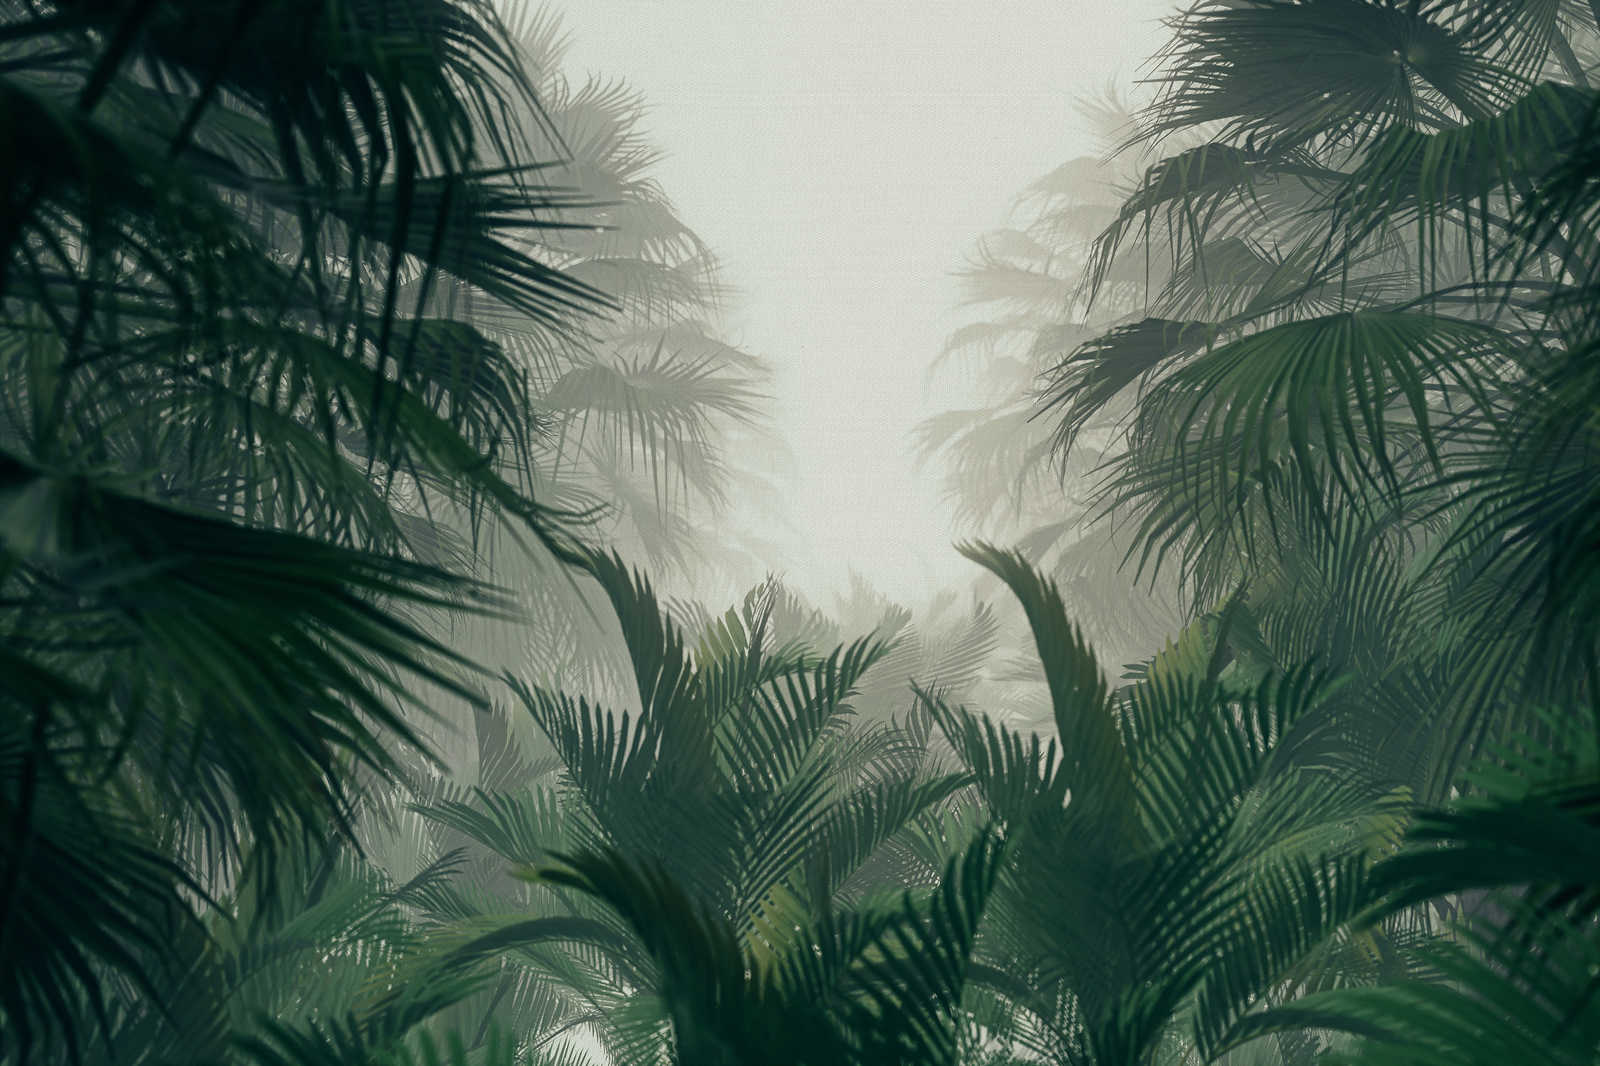             Rainy Season Jungle View Canvas Painting - 0.90 m x 0.60 m
        